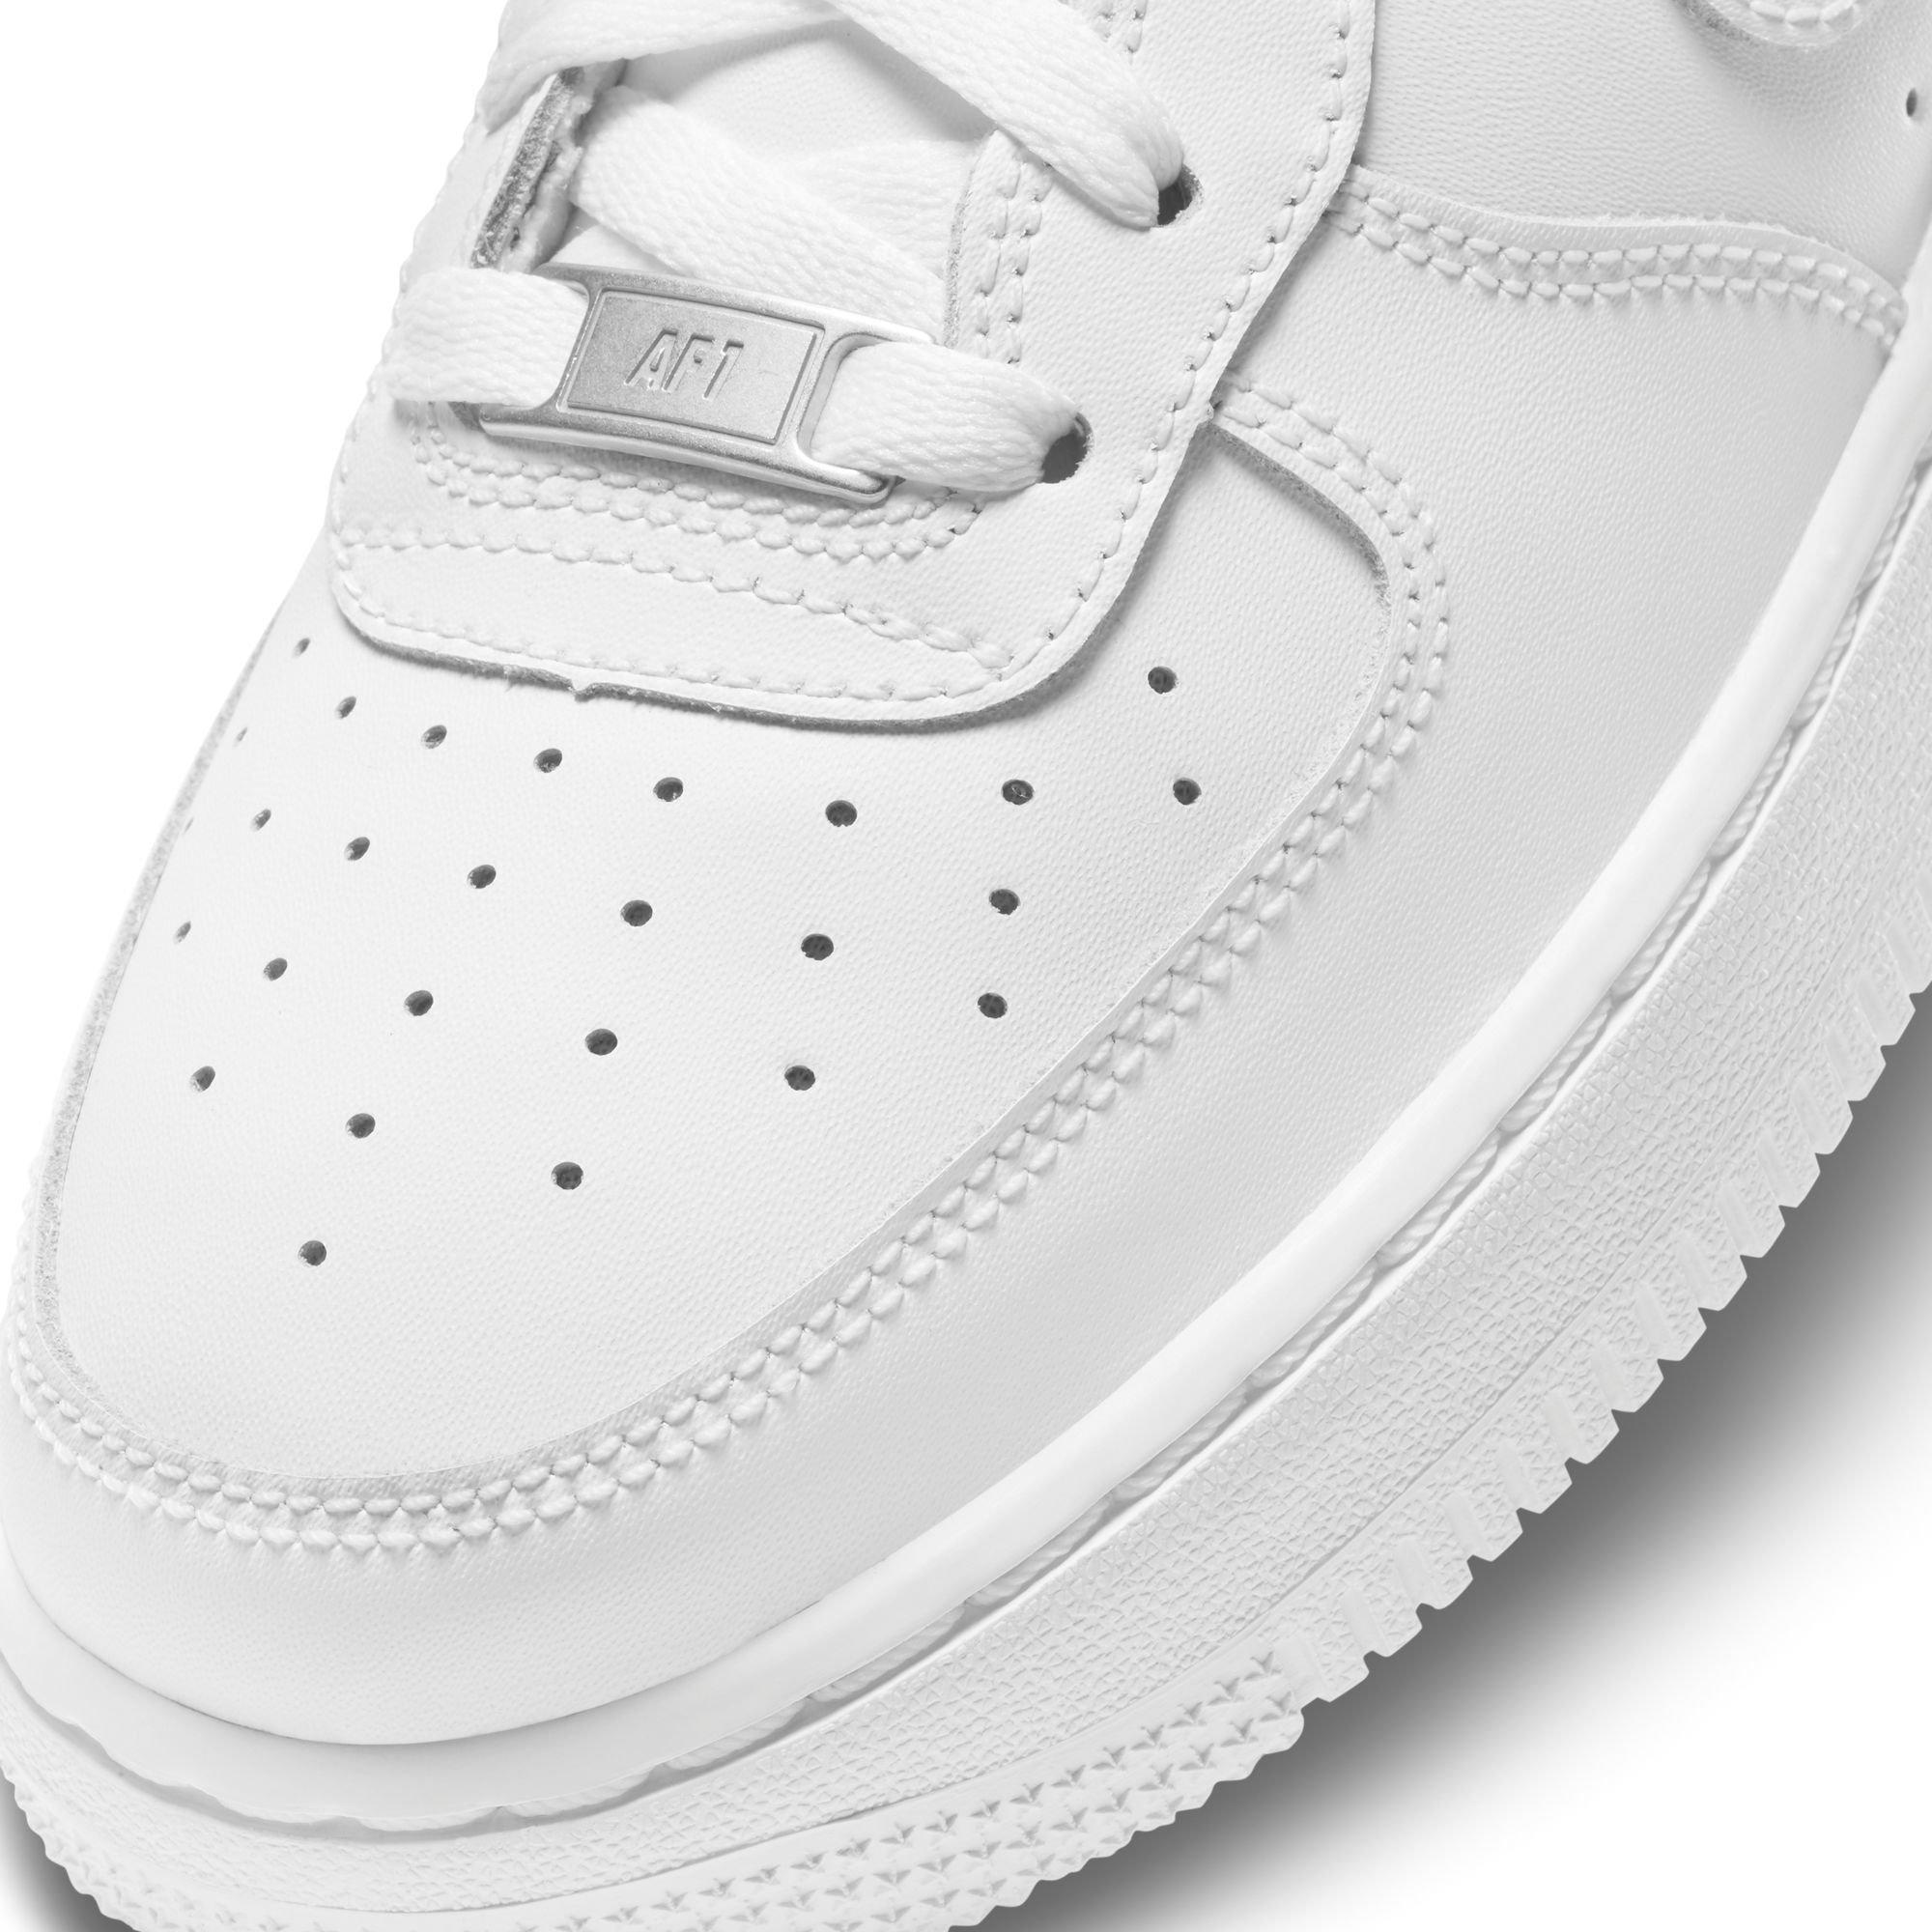 Nike Air Force 1 LV8 White/Green Abyss/Spring Green Toddler Boys' Shoe -  Hibbett